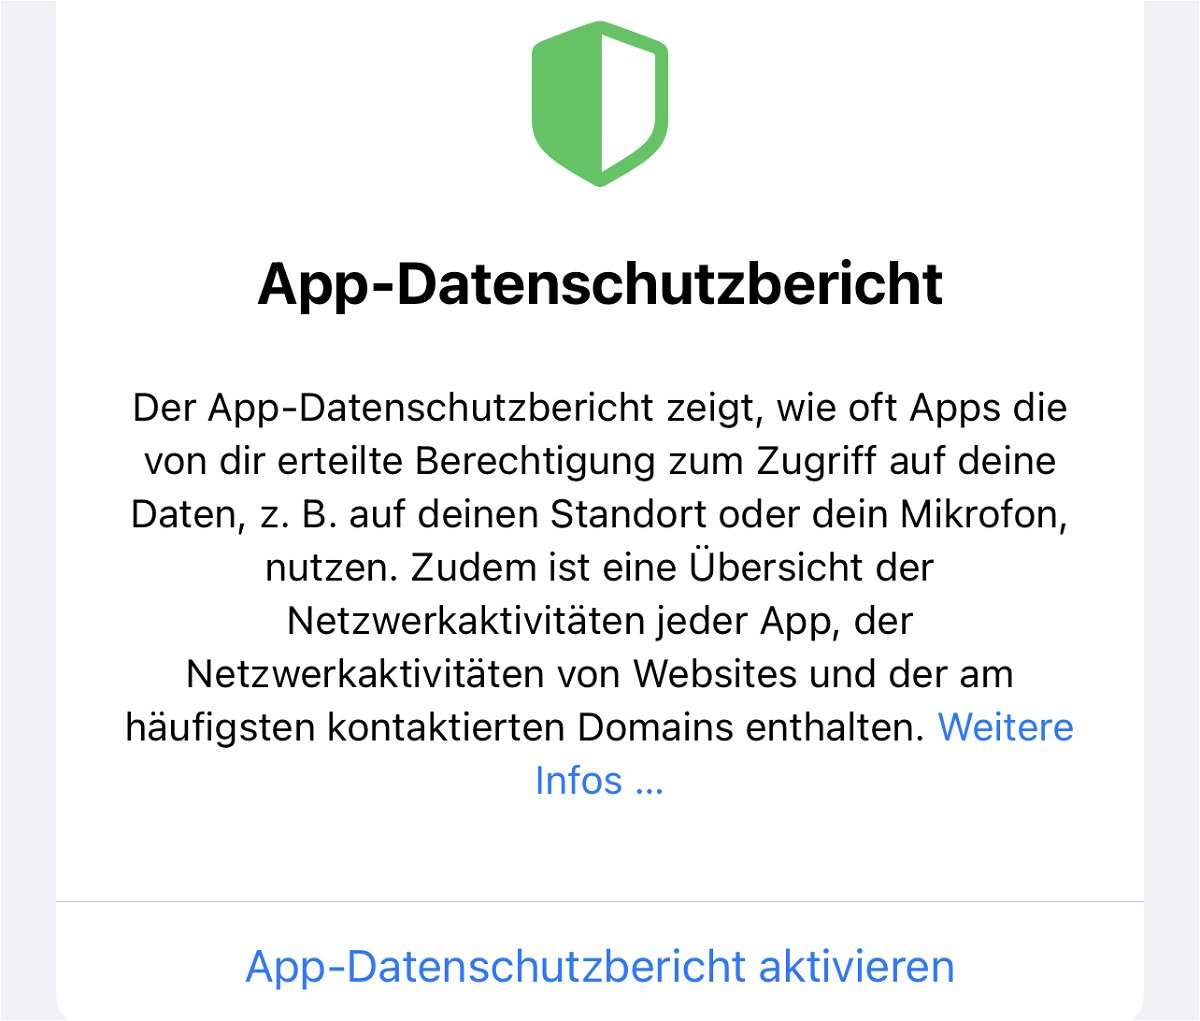 , App-Datenschutzbericht in iOS aktivieren